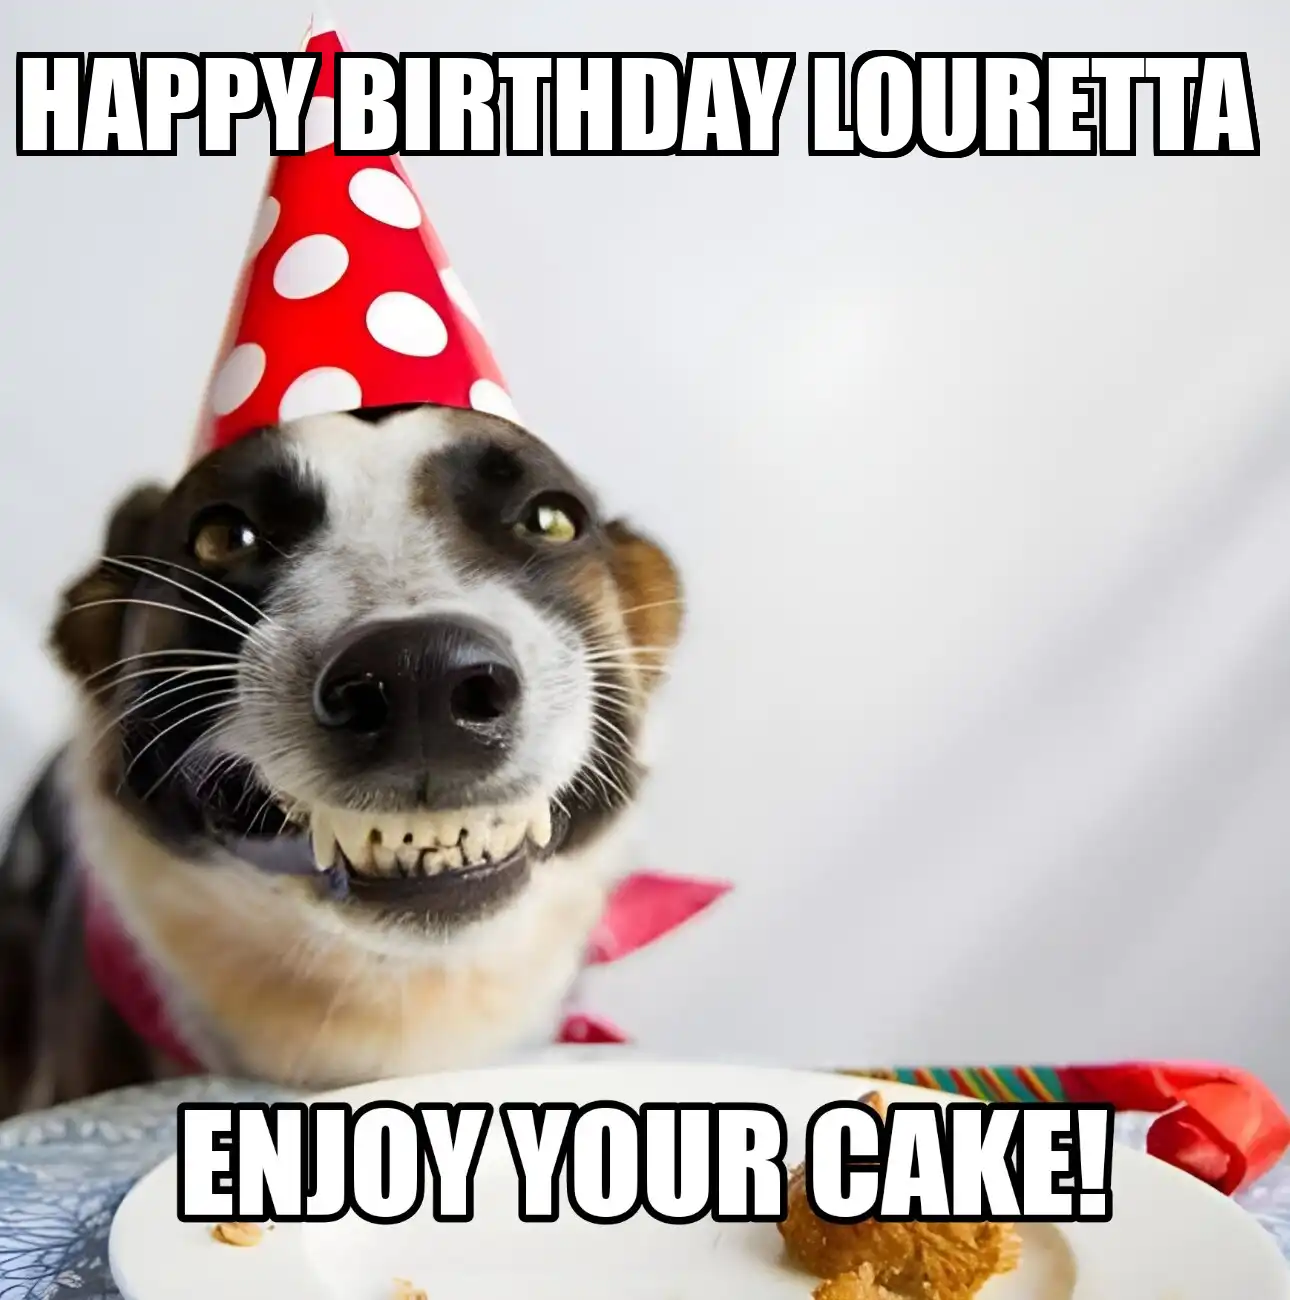 Happy Birthday Louretta Enjoy Your Cake Dog Meme